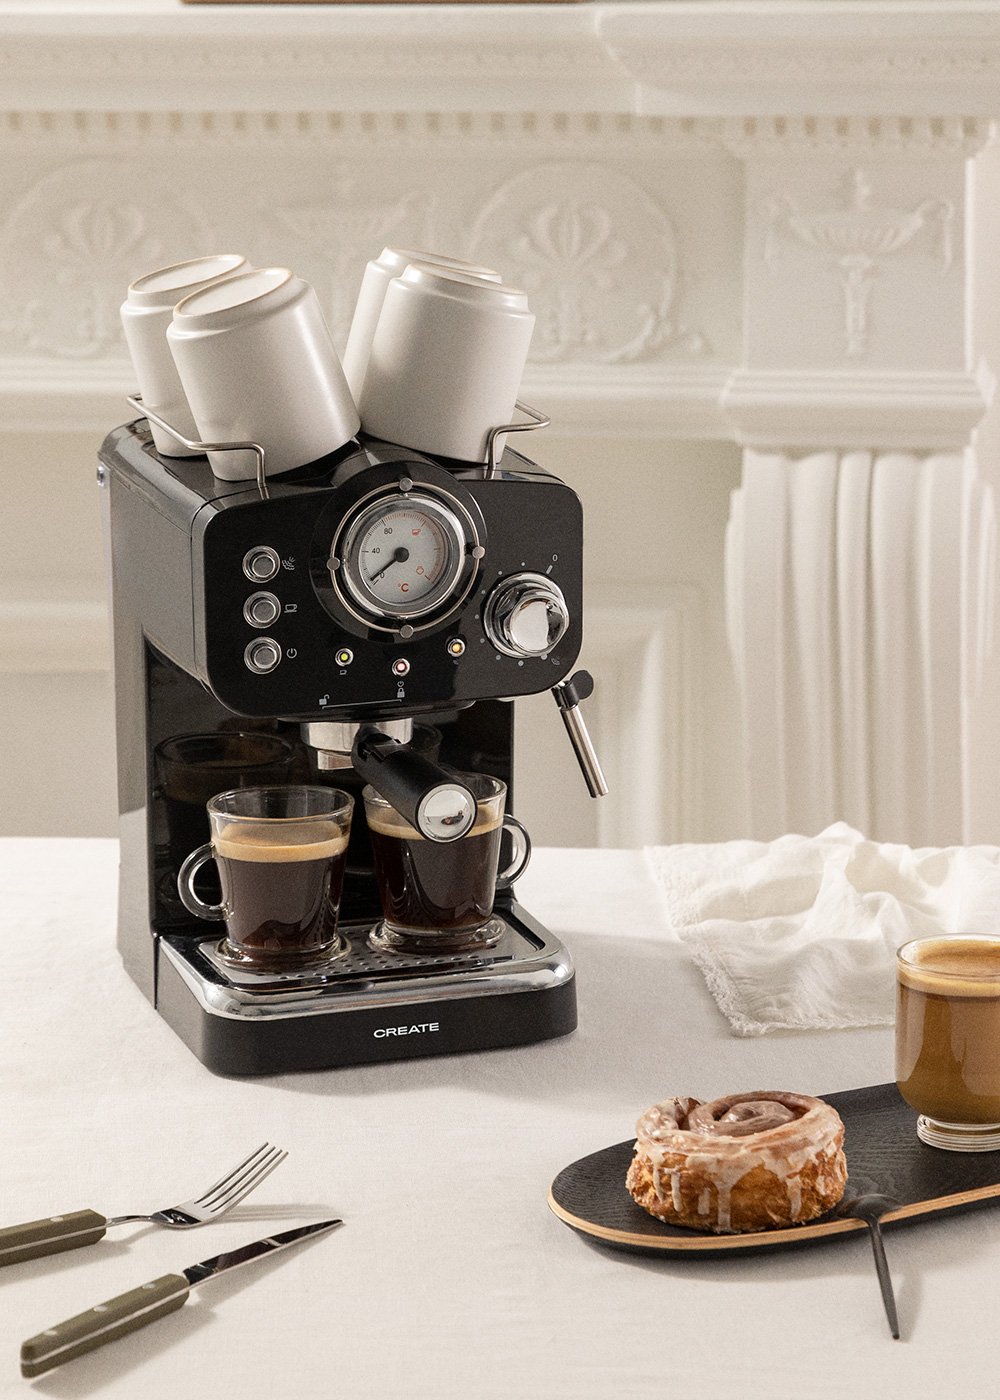 THERA RETRO GLOSS - Espresso-Kaffeemaschine mit glänzender Oberfläche